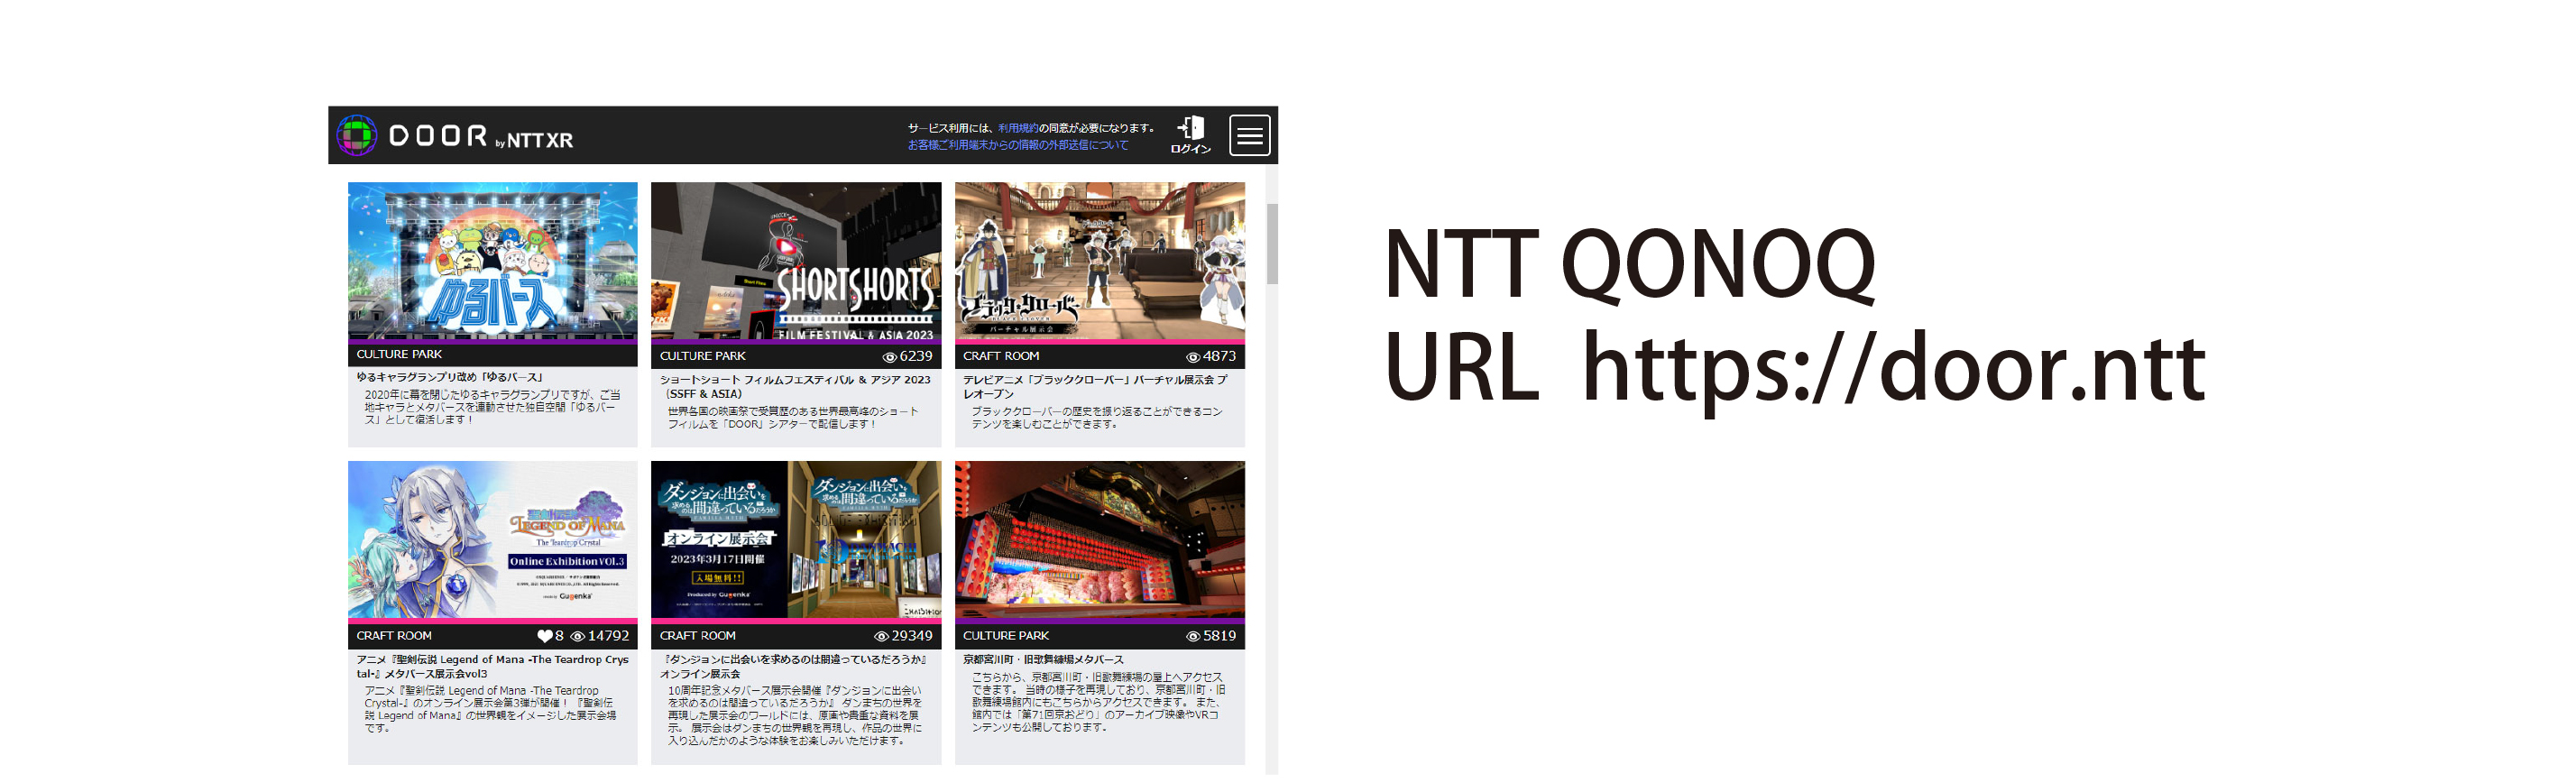 NTT QONOQ  URL  https://door.ntt